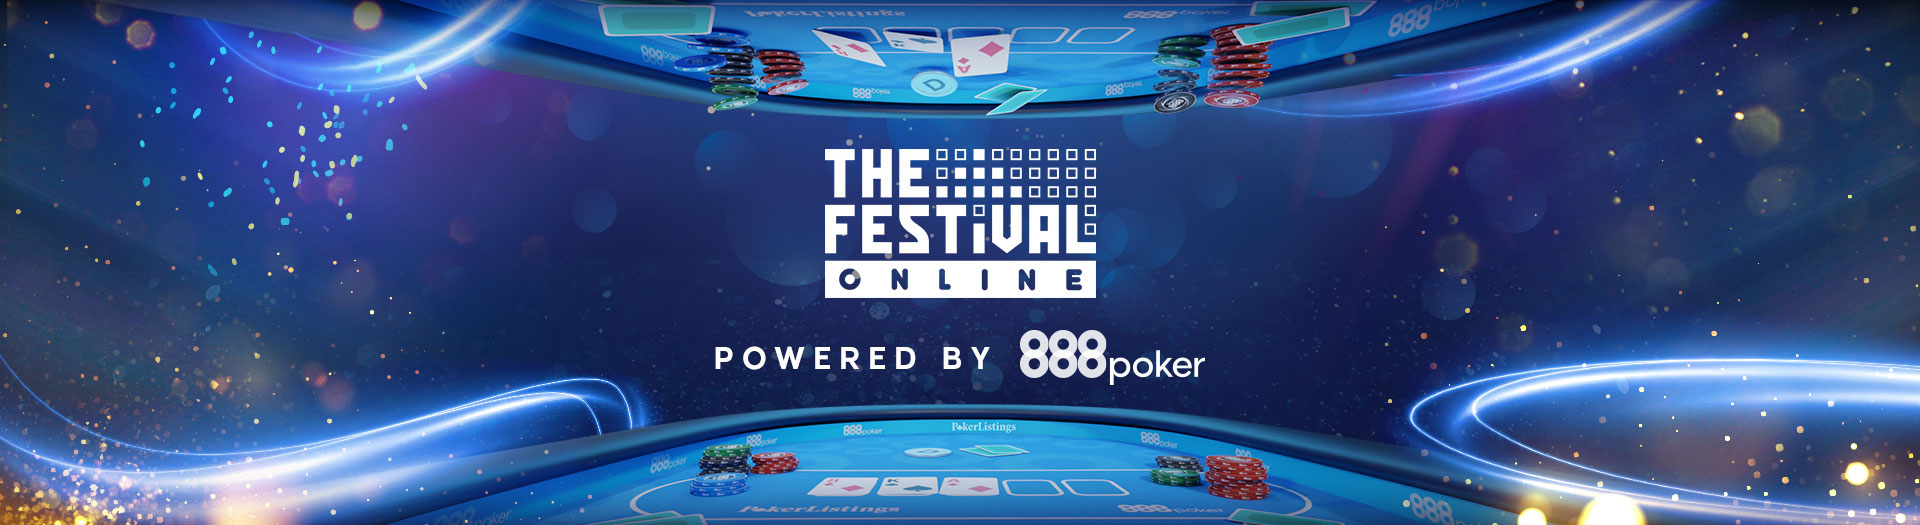 TS-55237-The-Festival-Online-PokerListings-LP-image-PC-1677664191587_tcm1530-581070